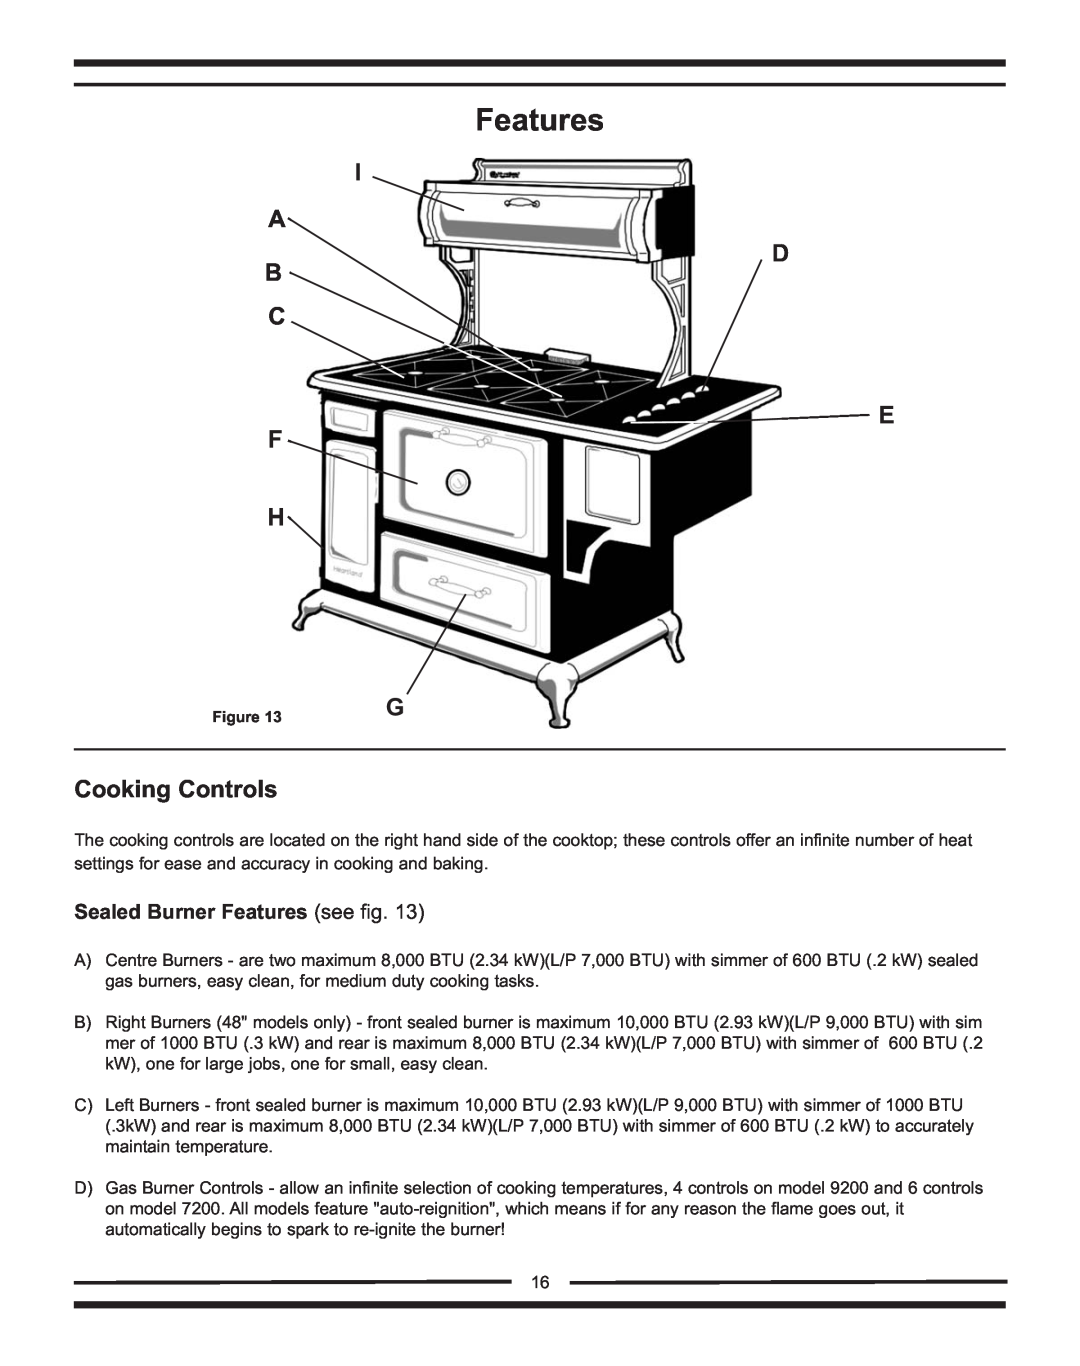 Heartland Bakeware 9200/7200 manual Features, I A D B C E F H, Cooking Controls 